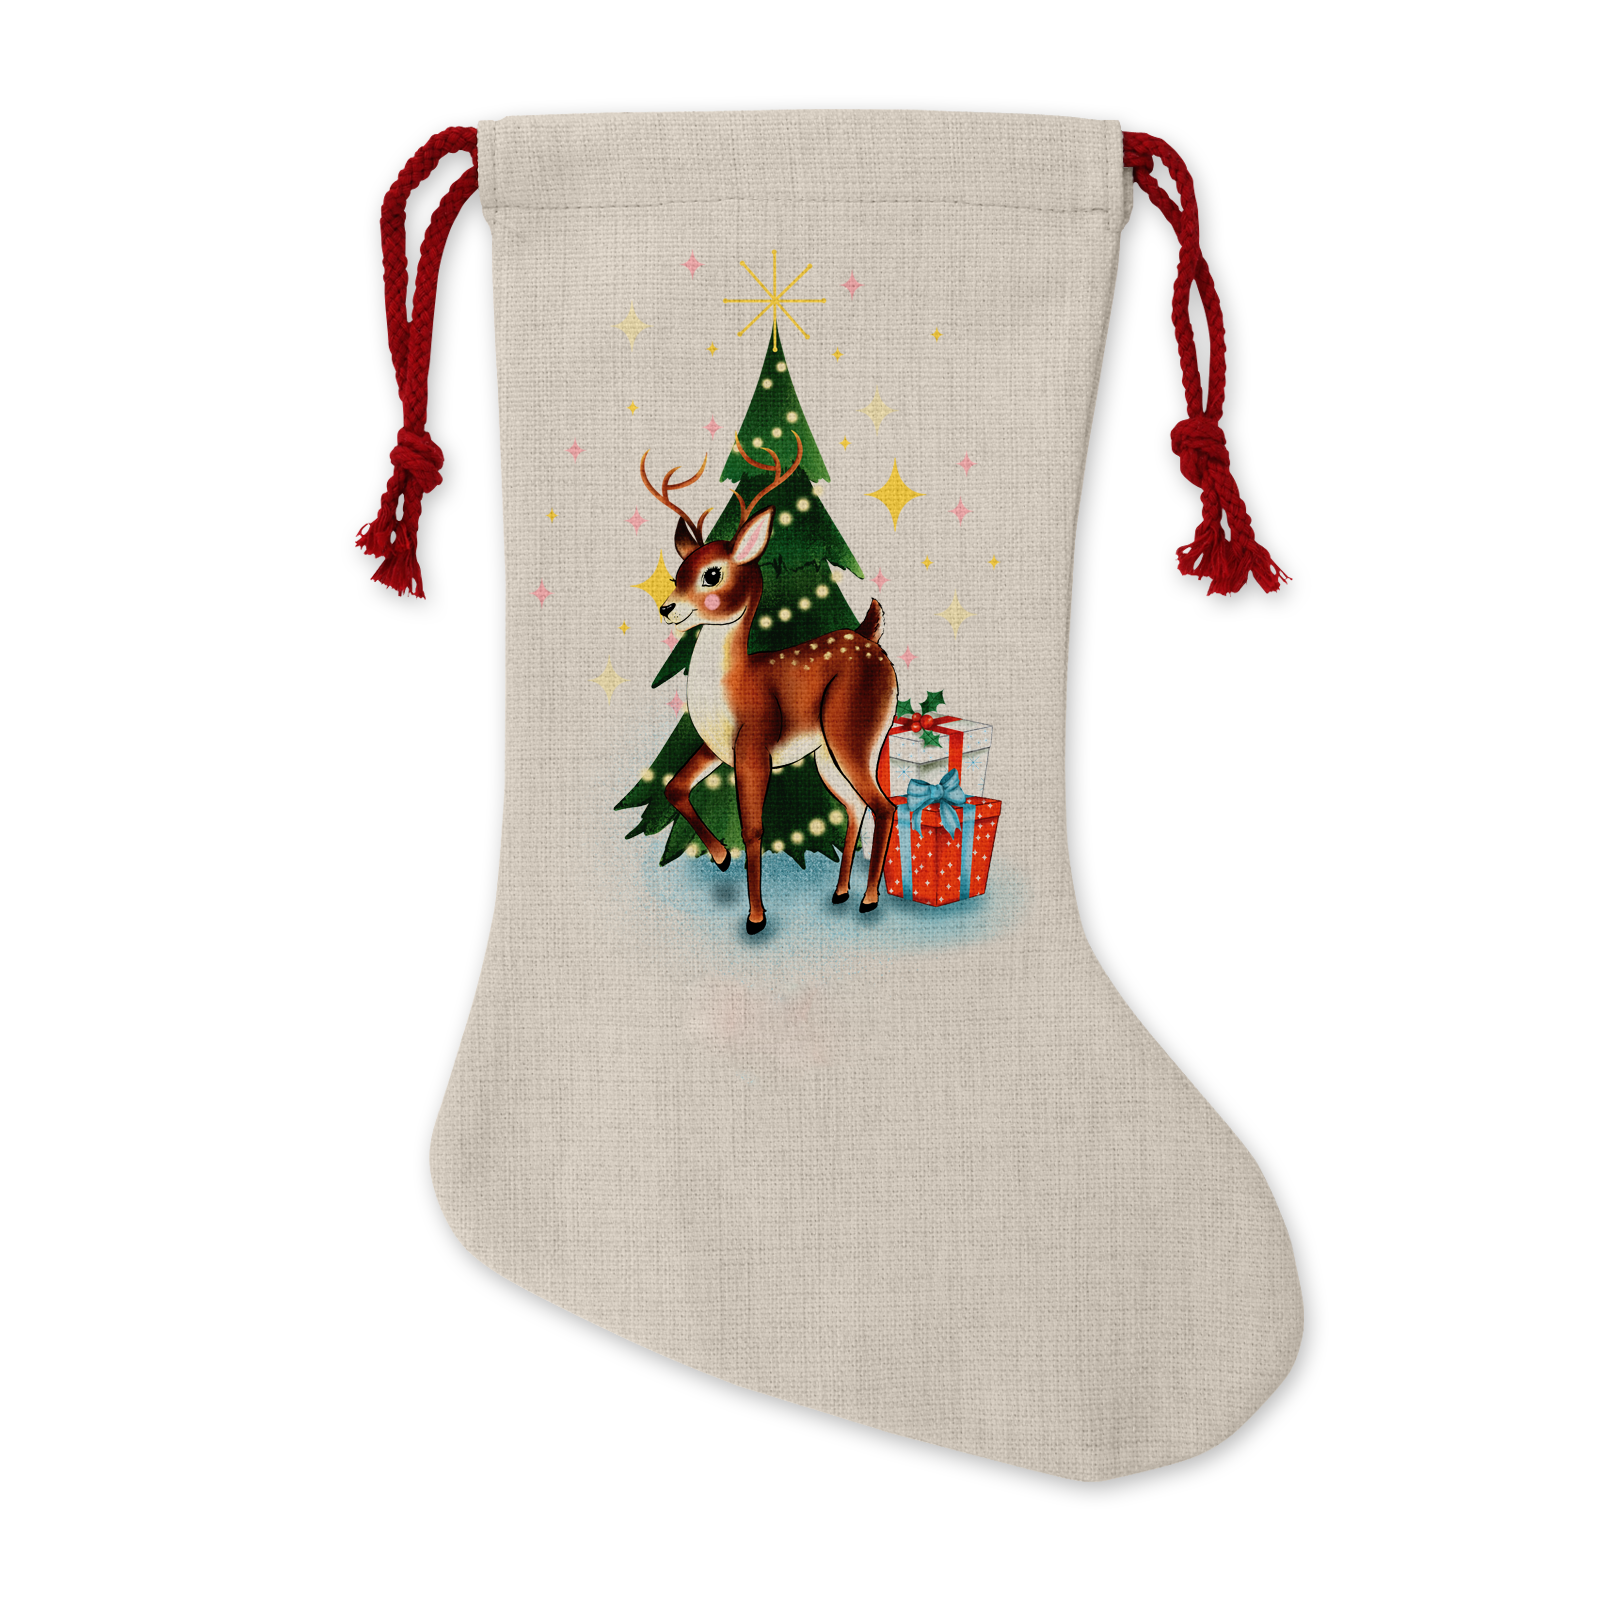 Kitsch retro reindeer christmas stocking